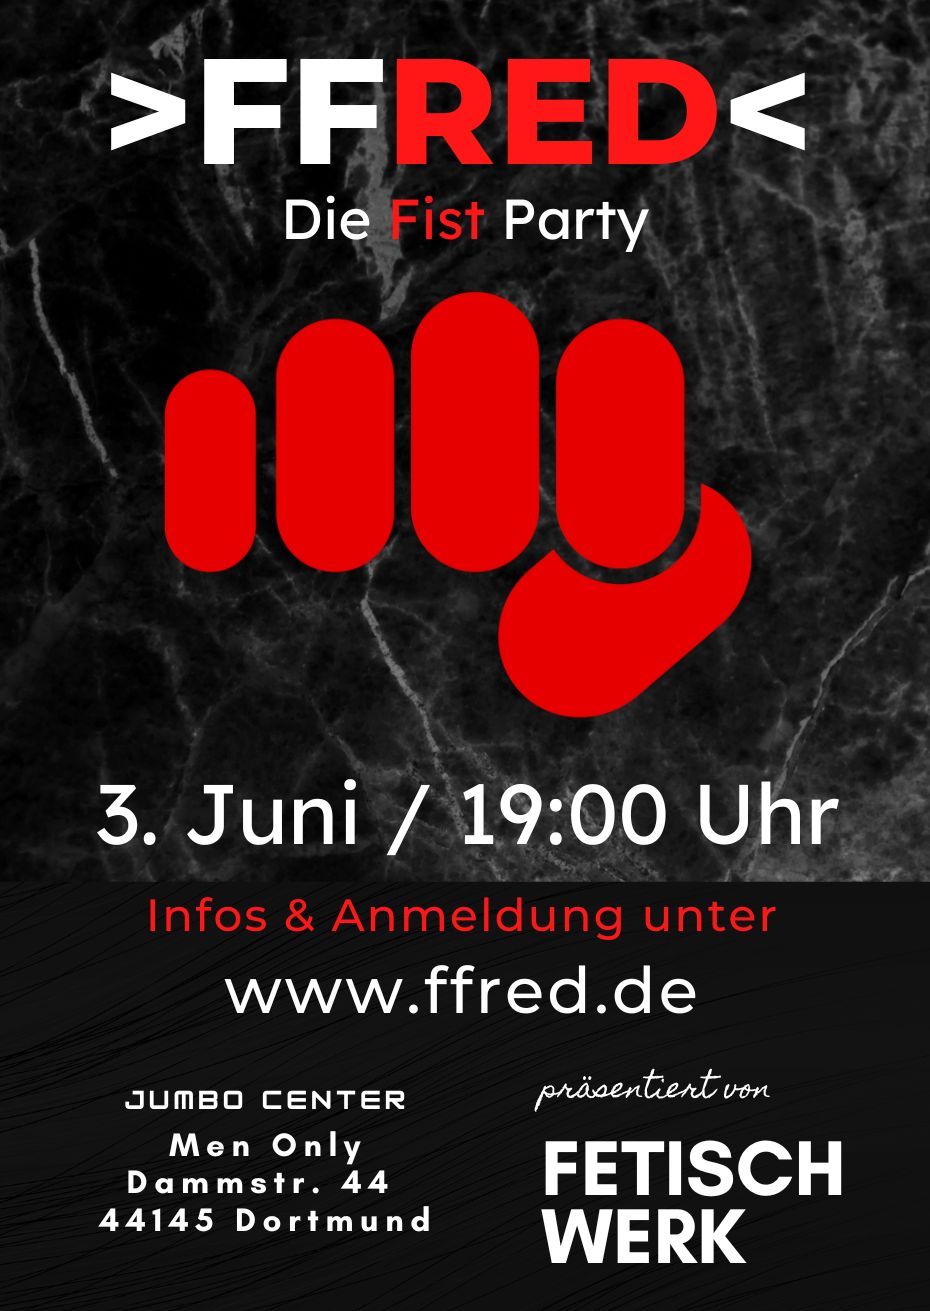 FFRED - Die Fistparty